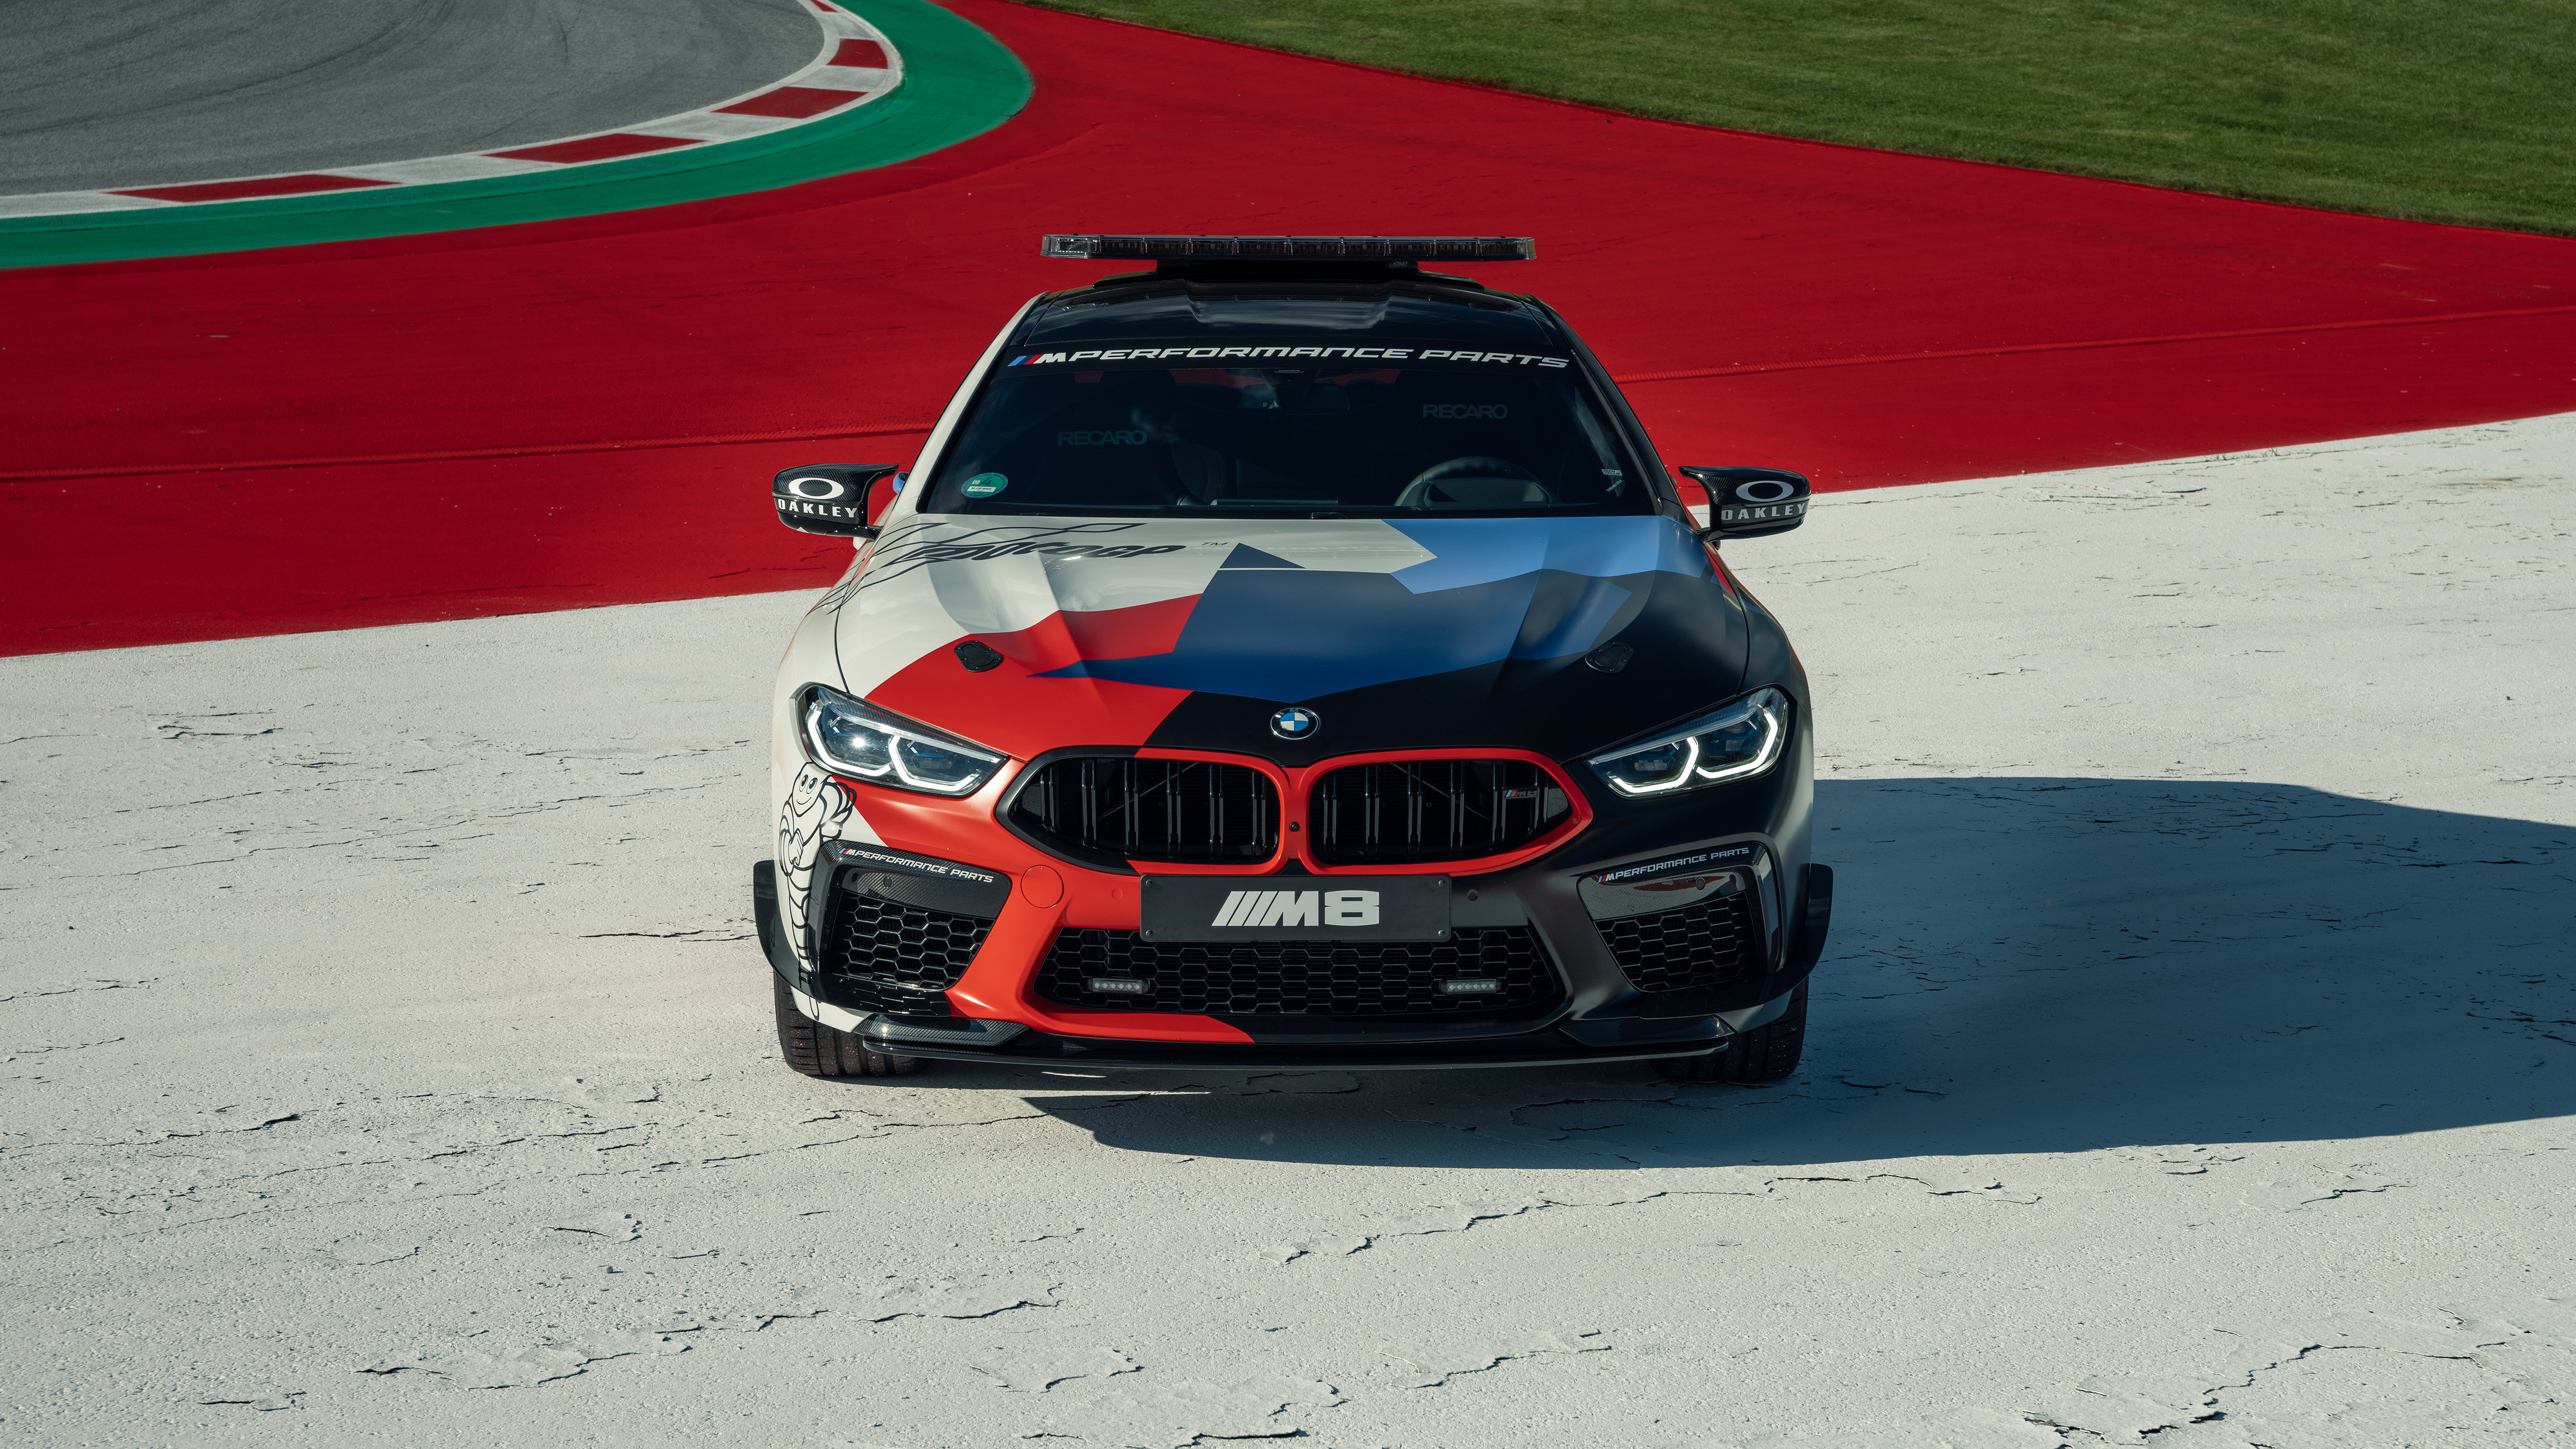 5K Racing Stripes Wallpapers